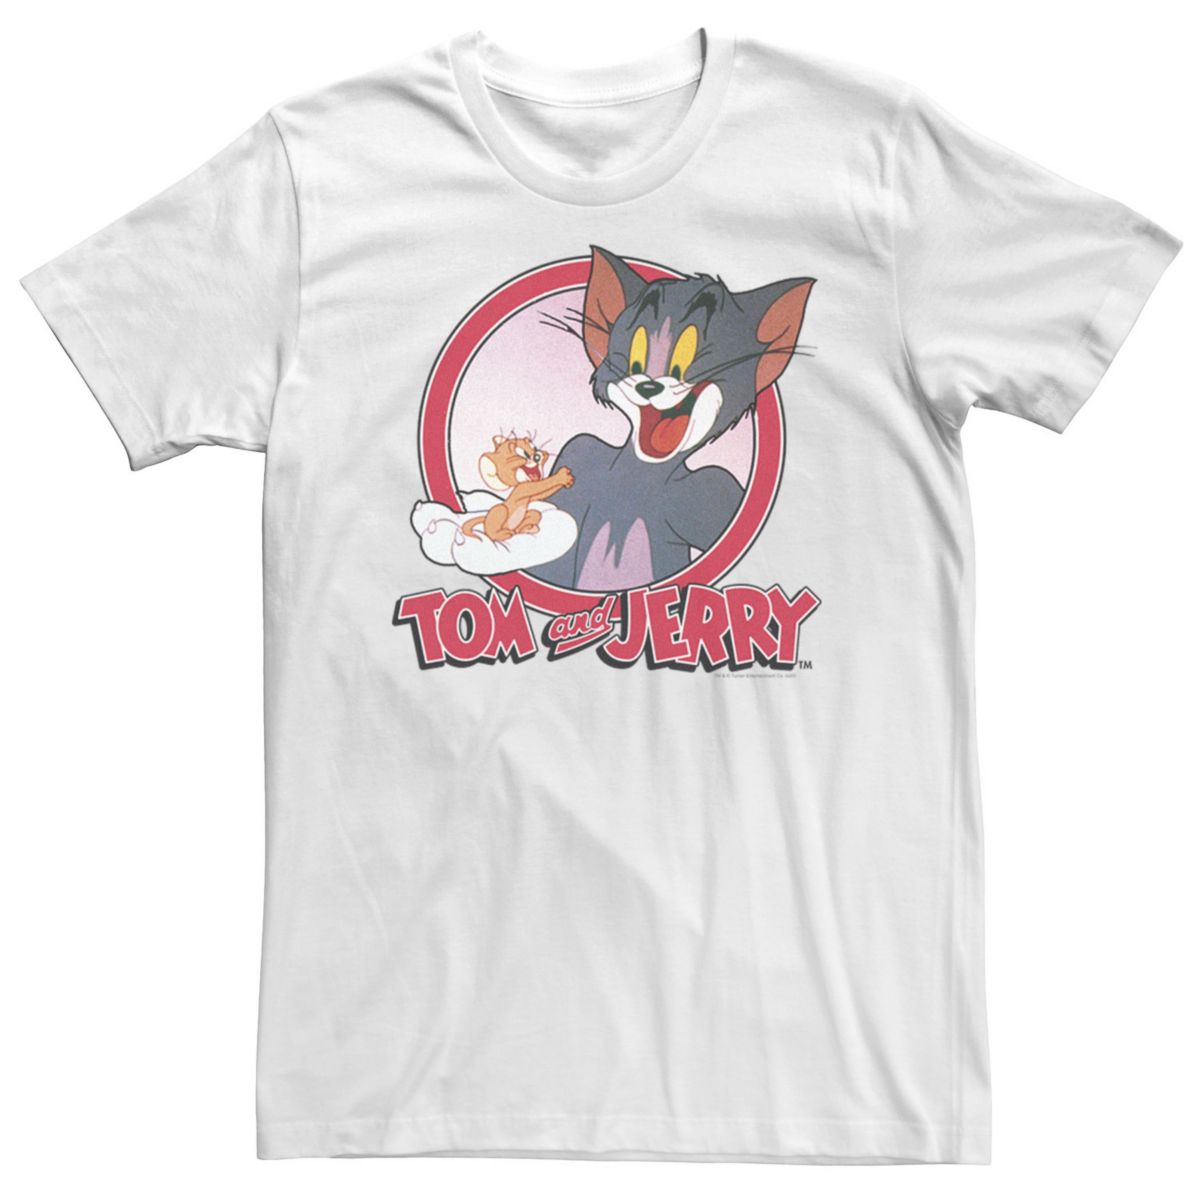 Tom taller. Кофта Тома и Джерри. Футболка том и Джерри 90-х. Футболка том и Джерри черная. Платье для девочки Tom & Jerry.